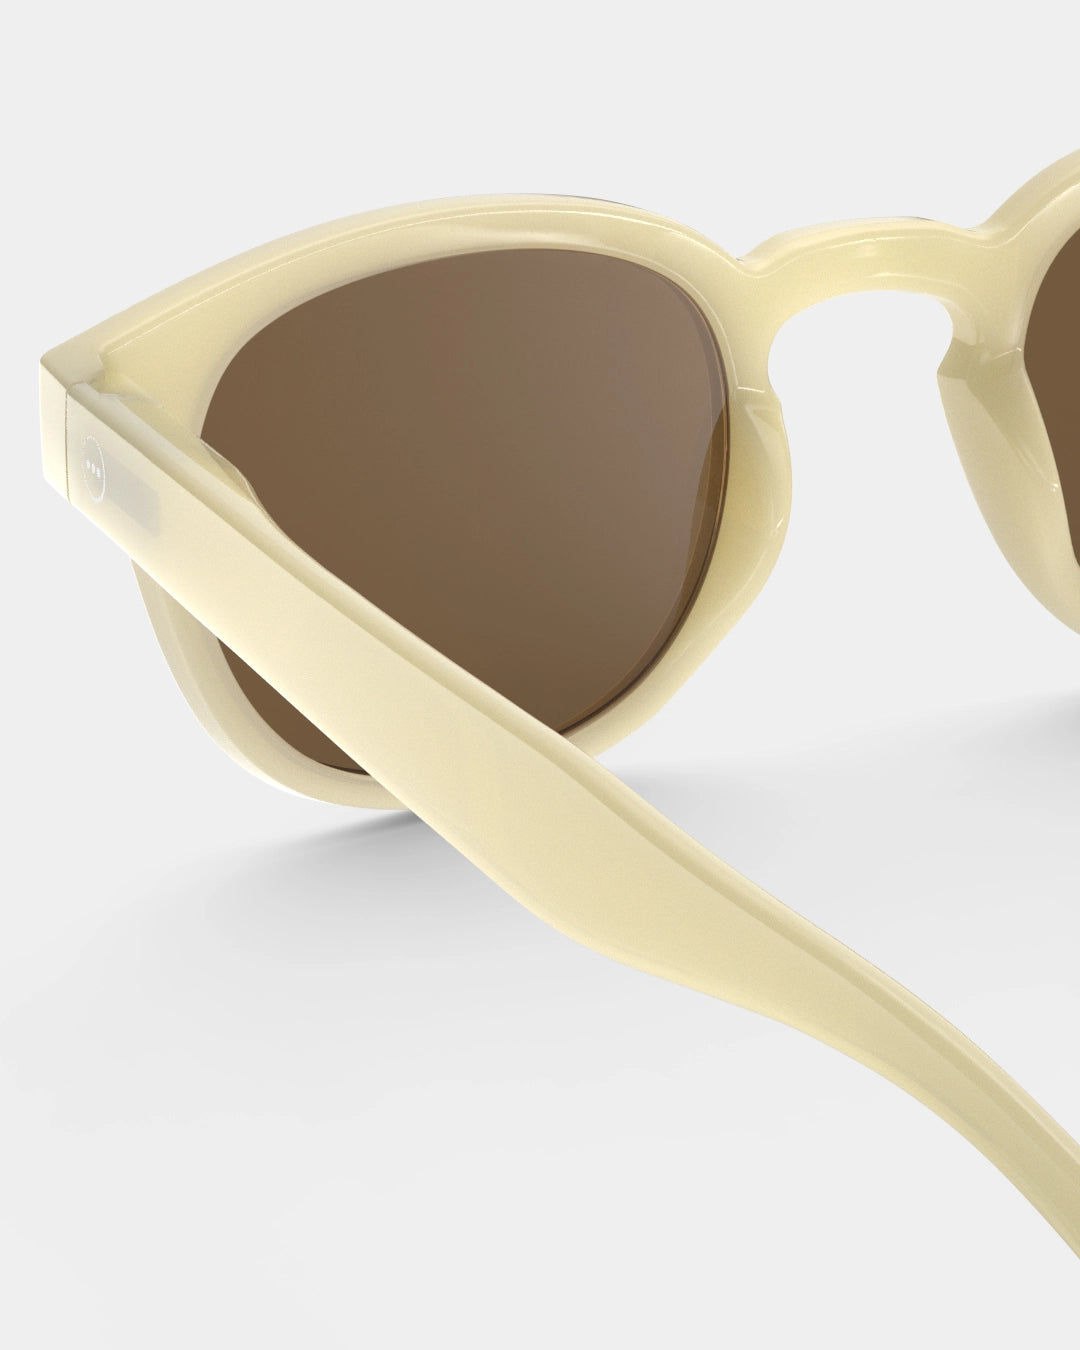 Sunglasses ‘Glossy Ivory’ #C